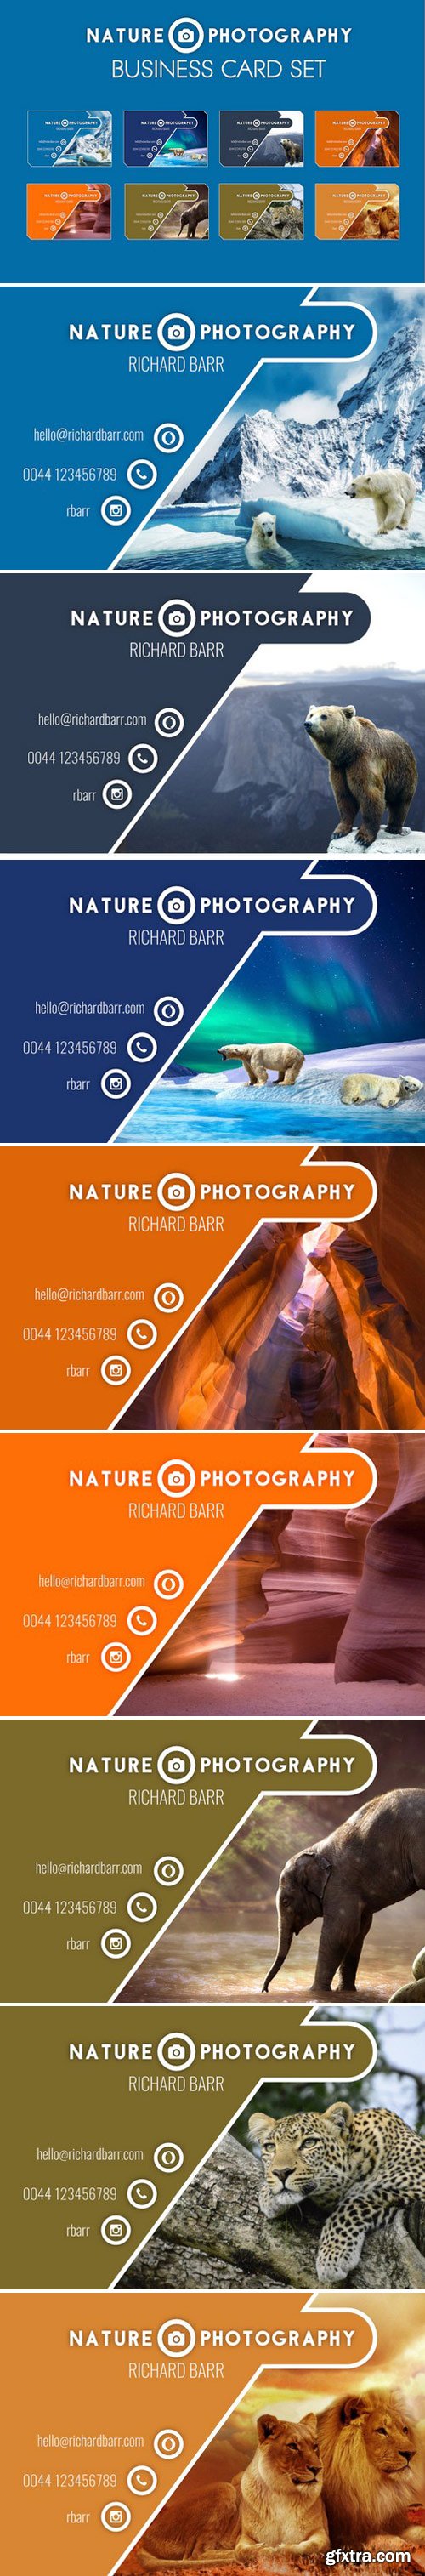 CM - Nature Photography Business Card Set 2204748